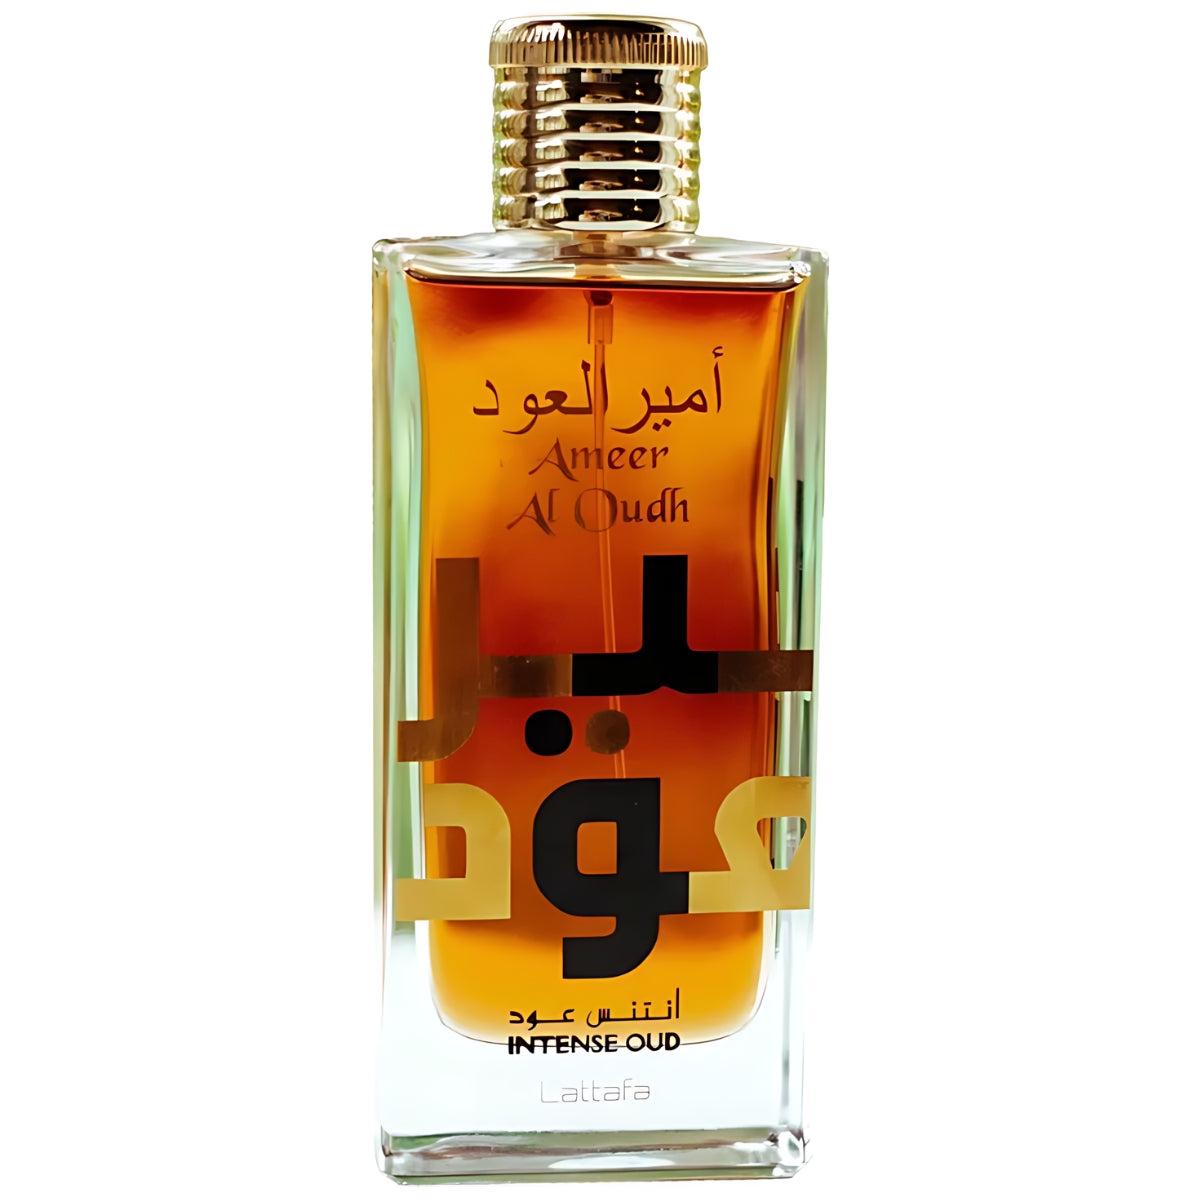 Lattafa Perfume Ameer Al Oudh Intense Oud Eau de Parfum 100ml